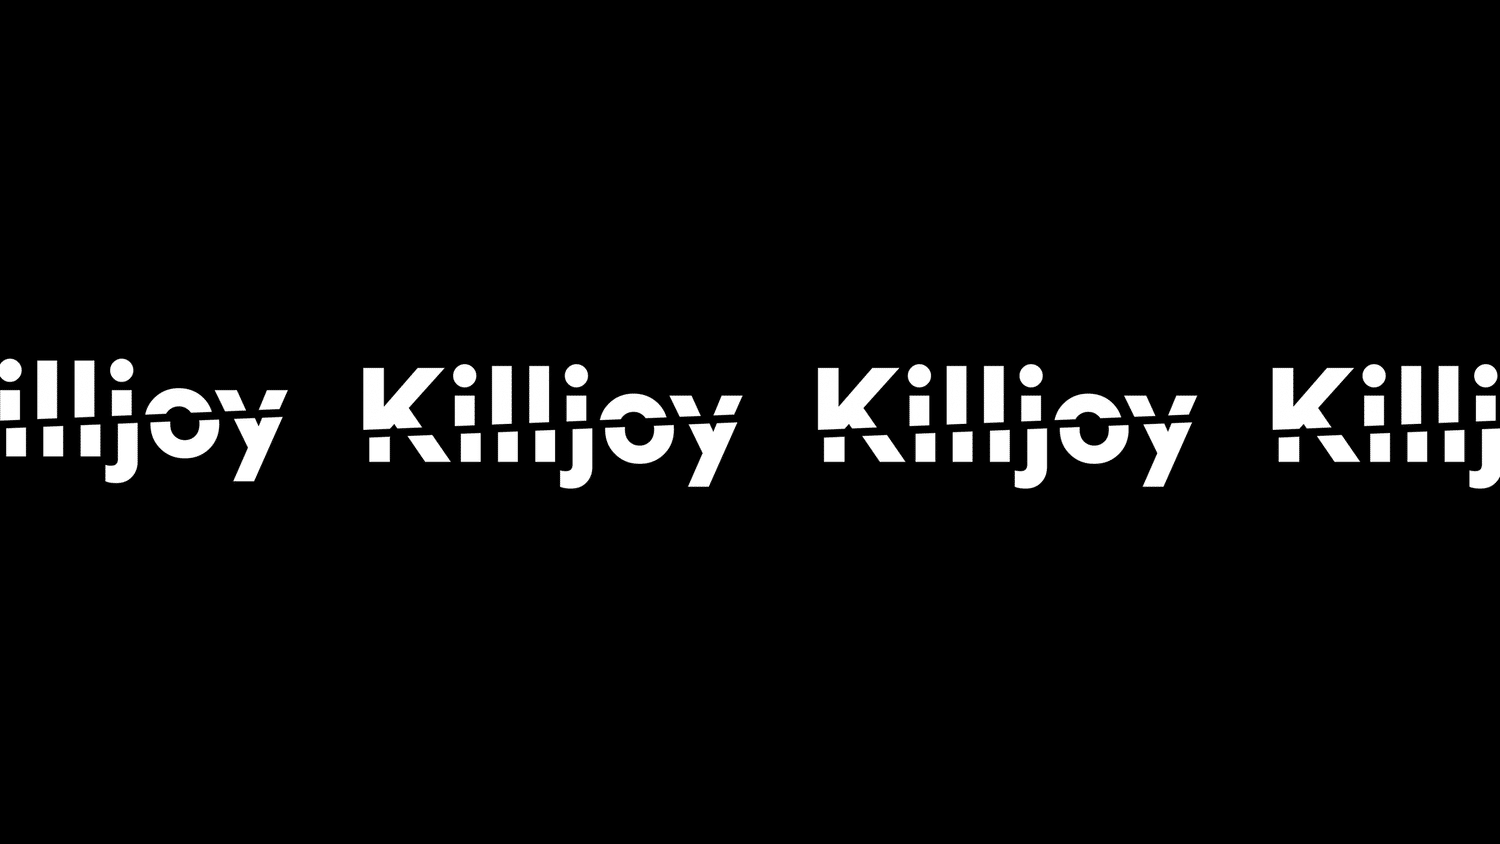 killjoy logos.png